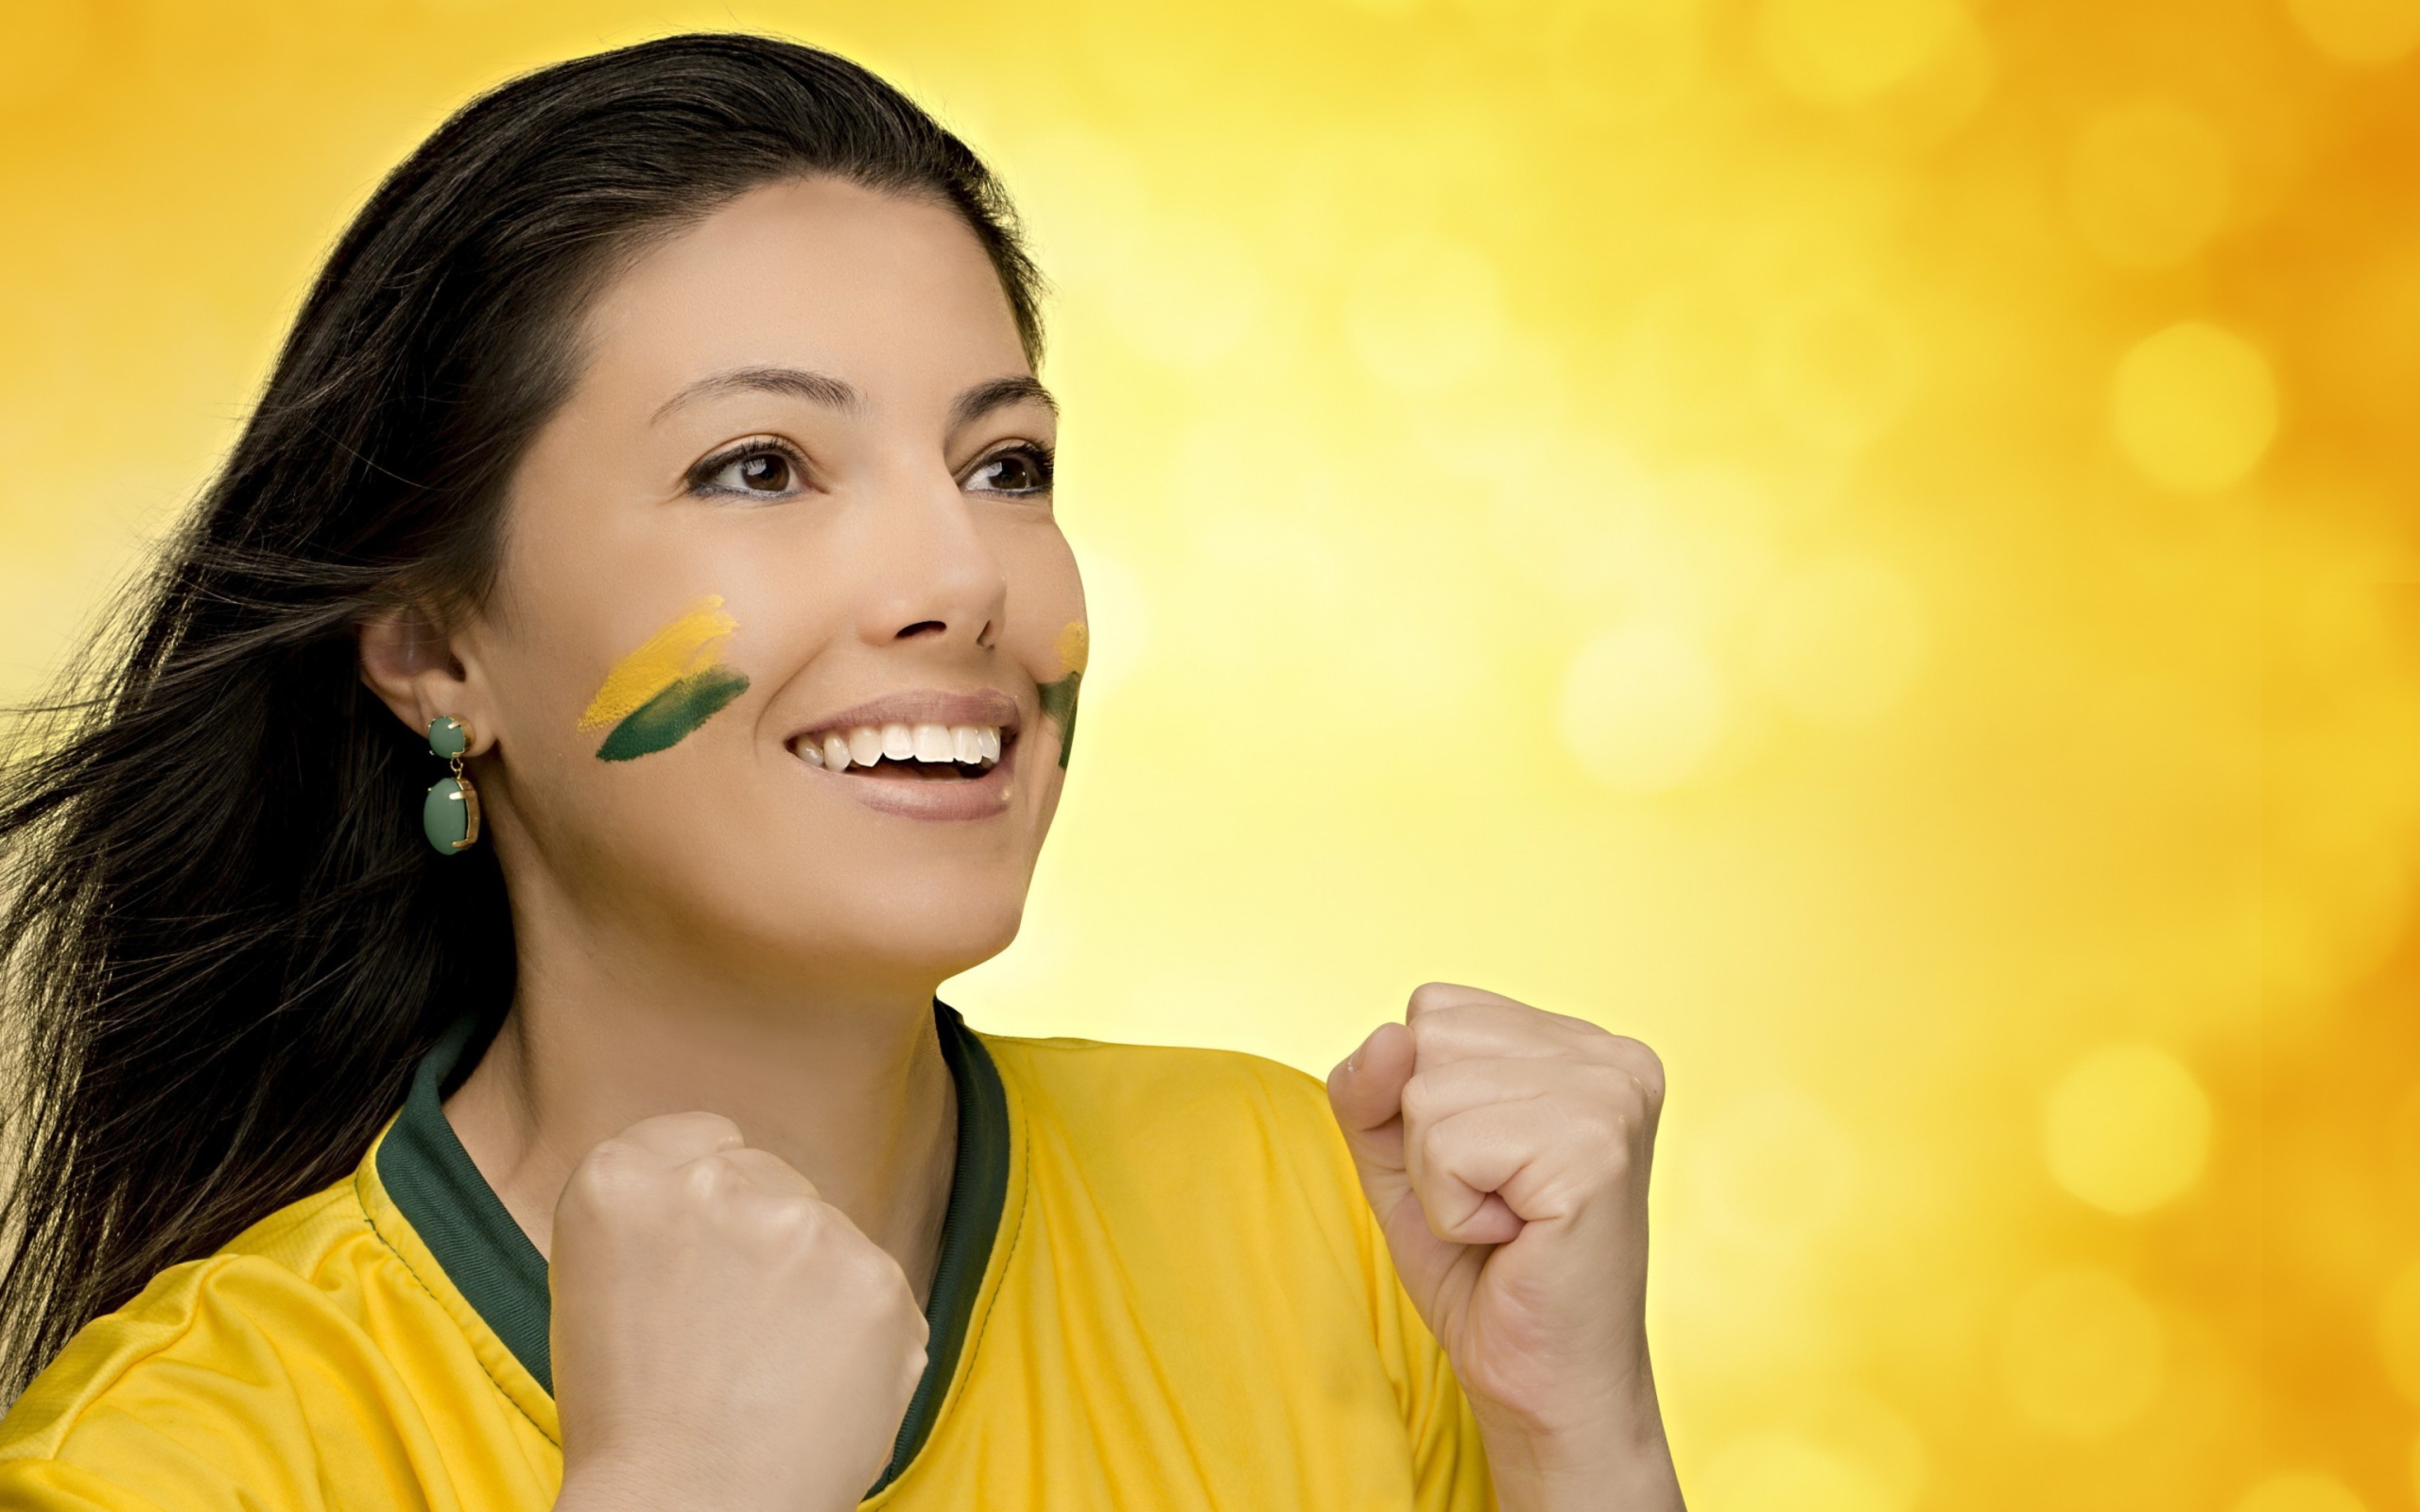 Brazil FIFA Football Cheerleader wallpaper 2560x1600